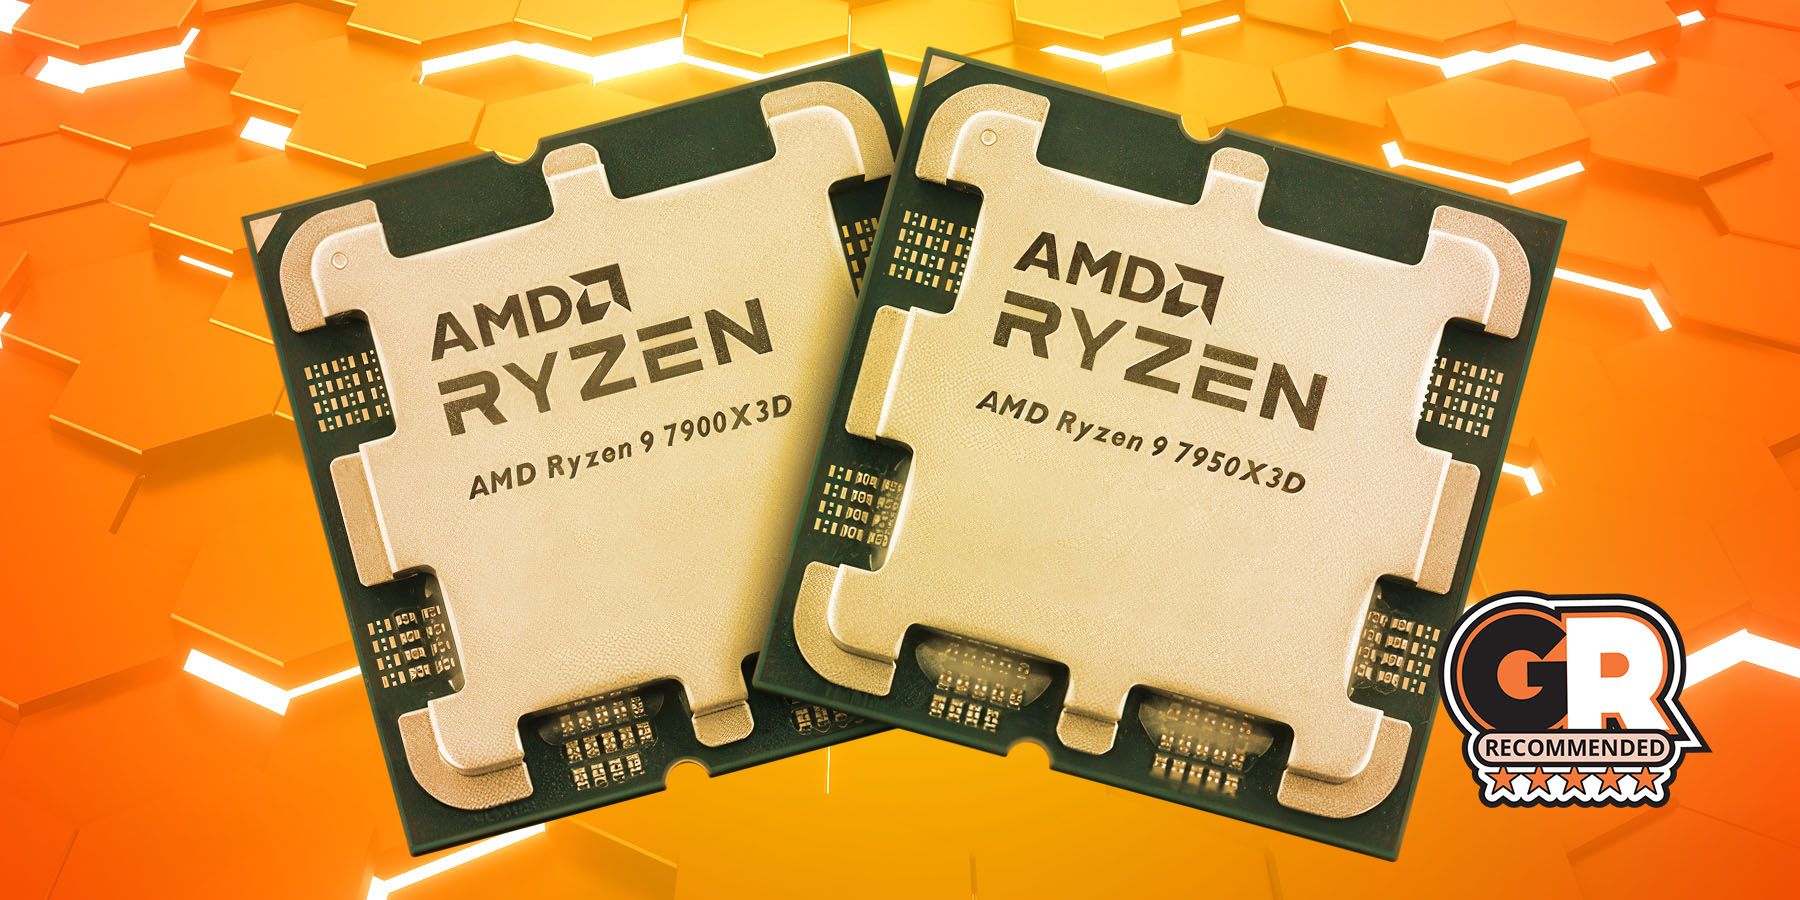 AMD Ryzen 9 7950X3D vs 7900X3D: Which to Buy?